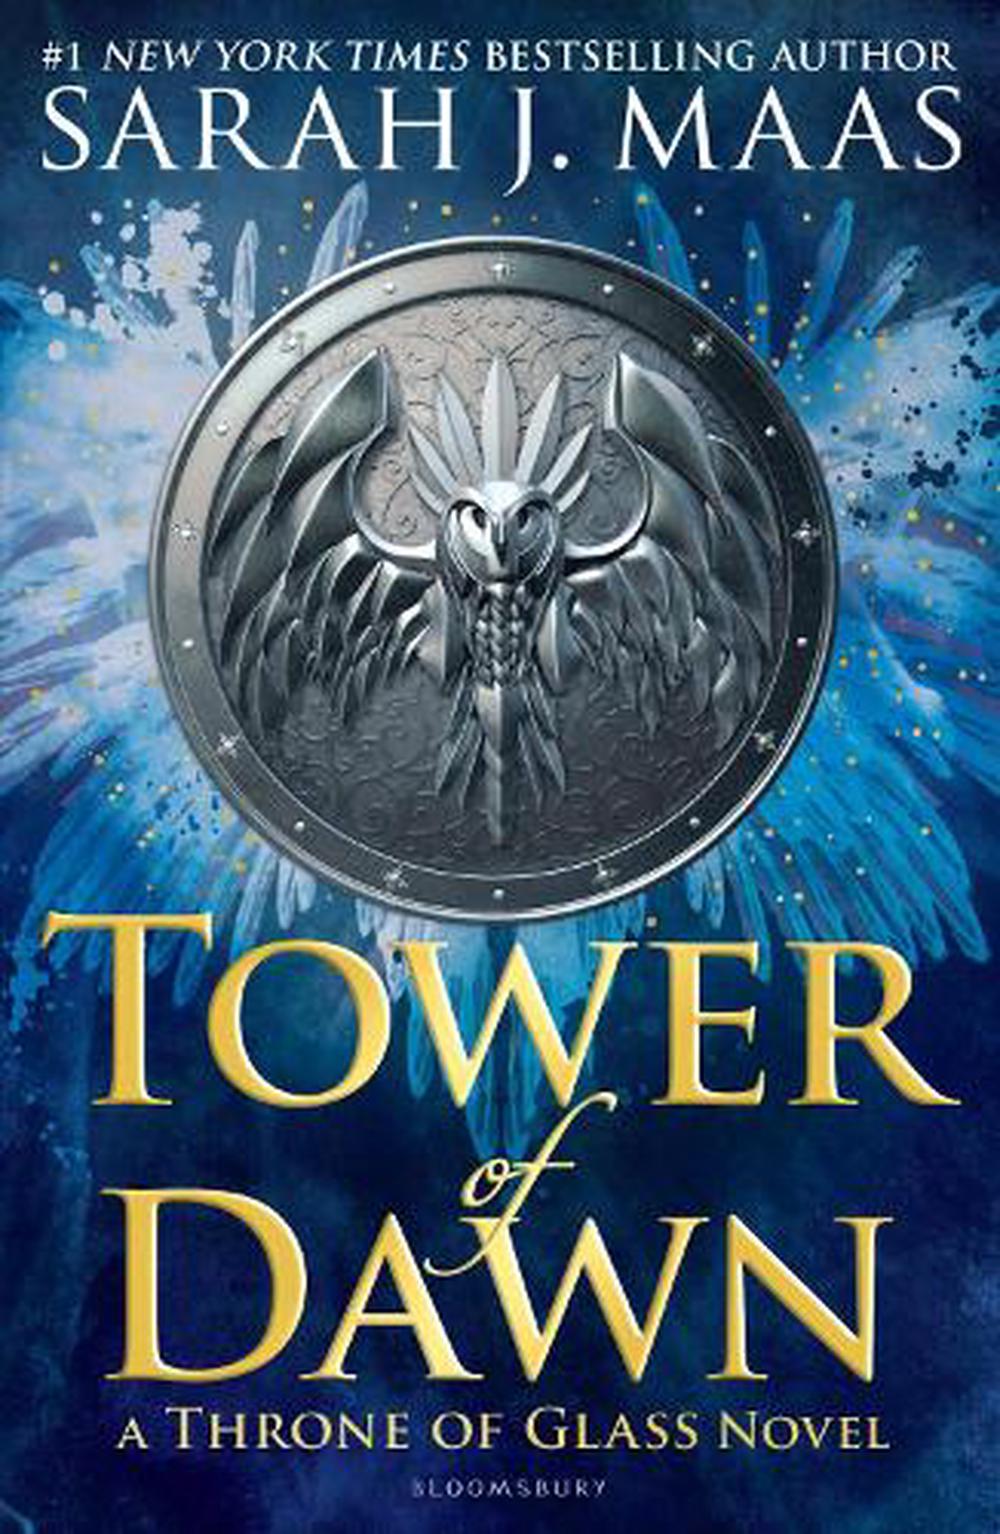 Livre de poche Tower of Dawn par Sarah J. Maas (anglais) - Photo 1 sur 1